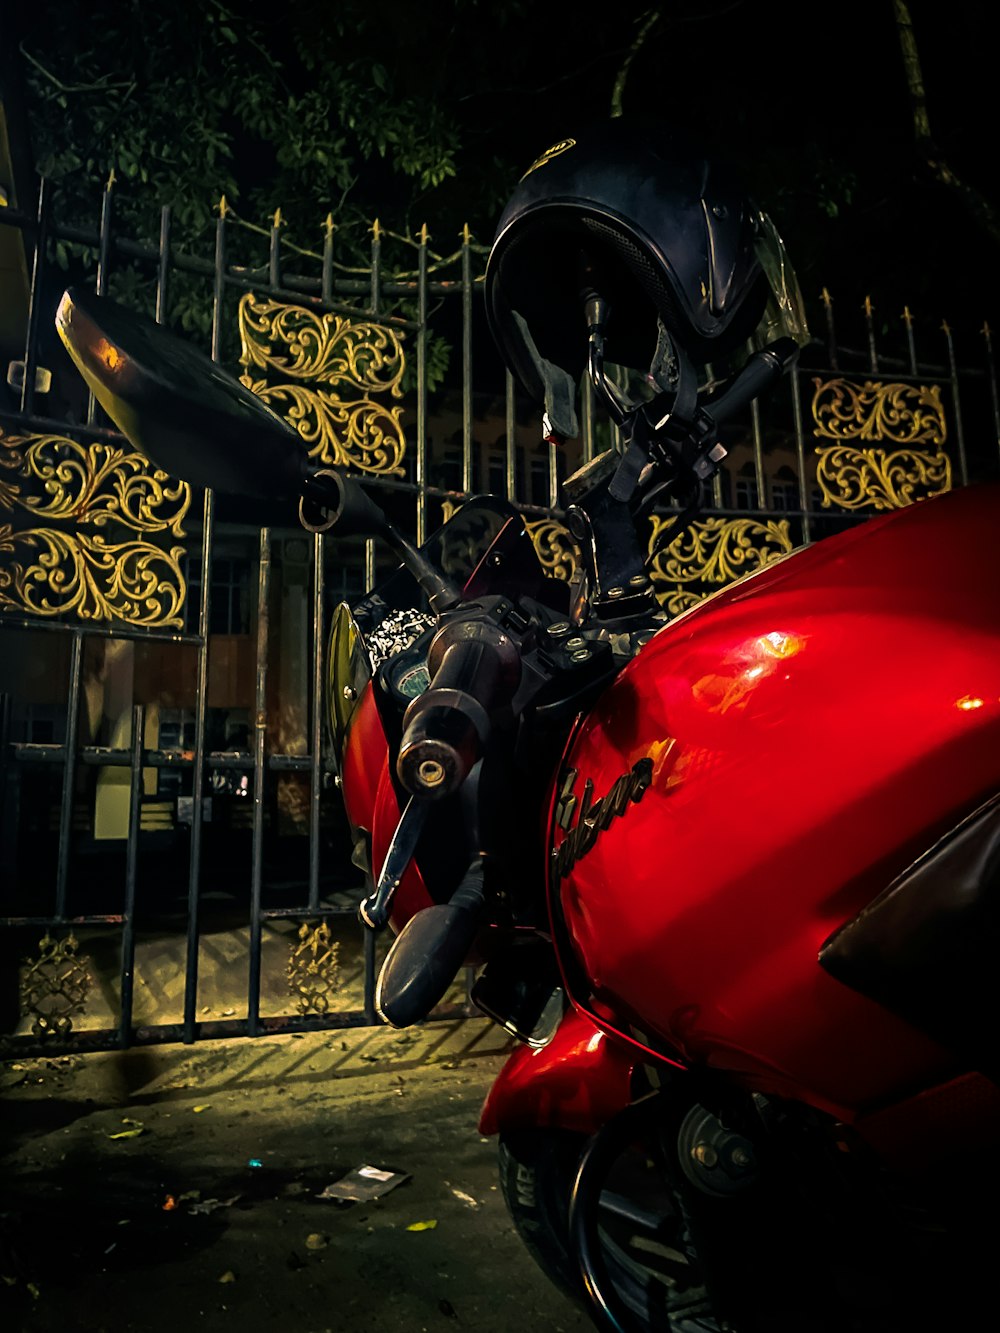 Una motocicleta roja estacionada frente a una puerta